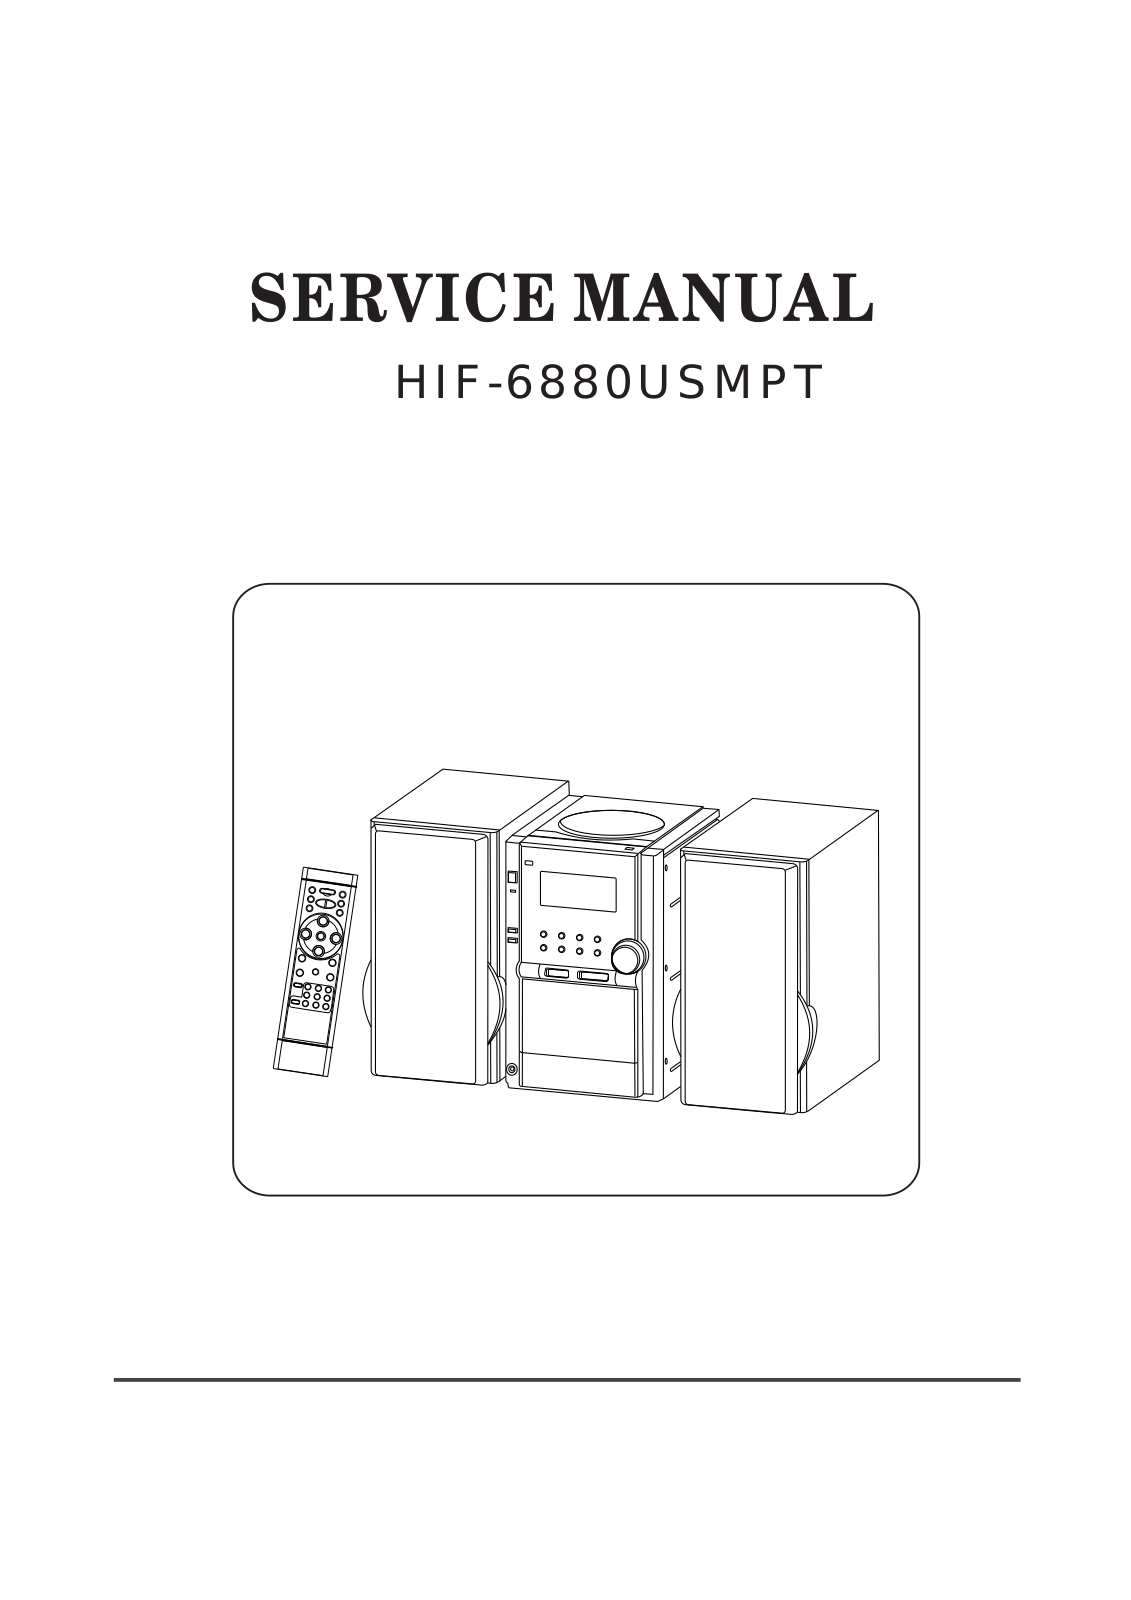 Roadstar HIF-6880USMPT Service Manual